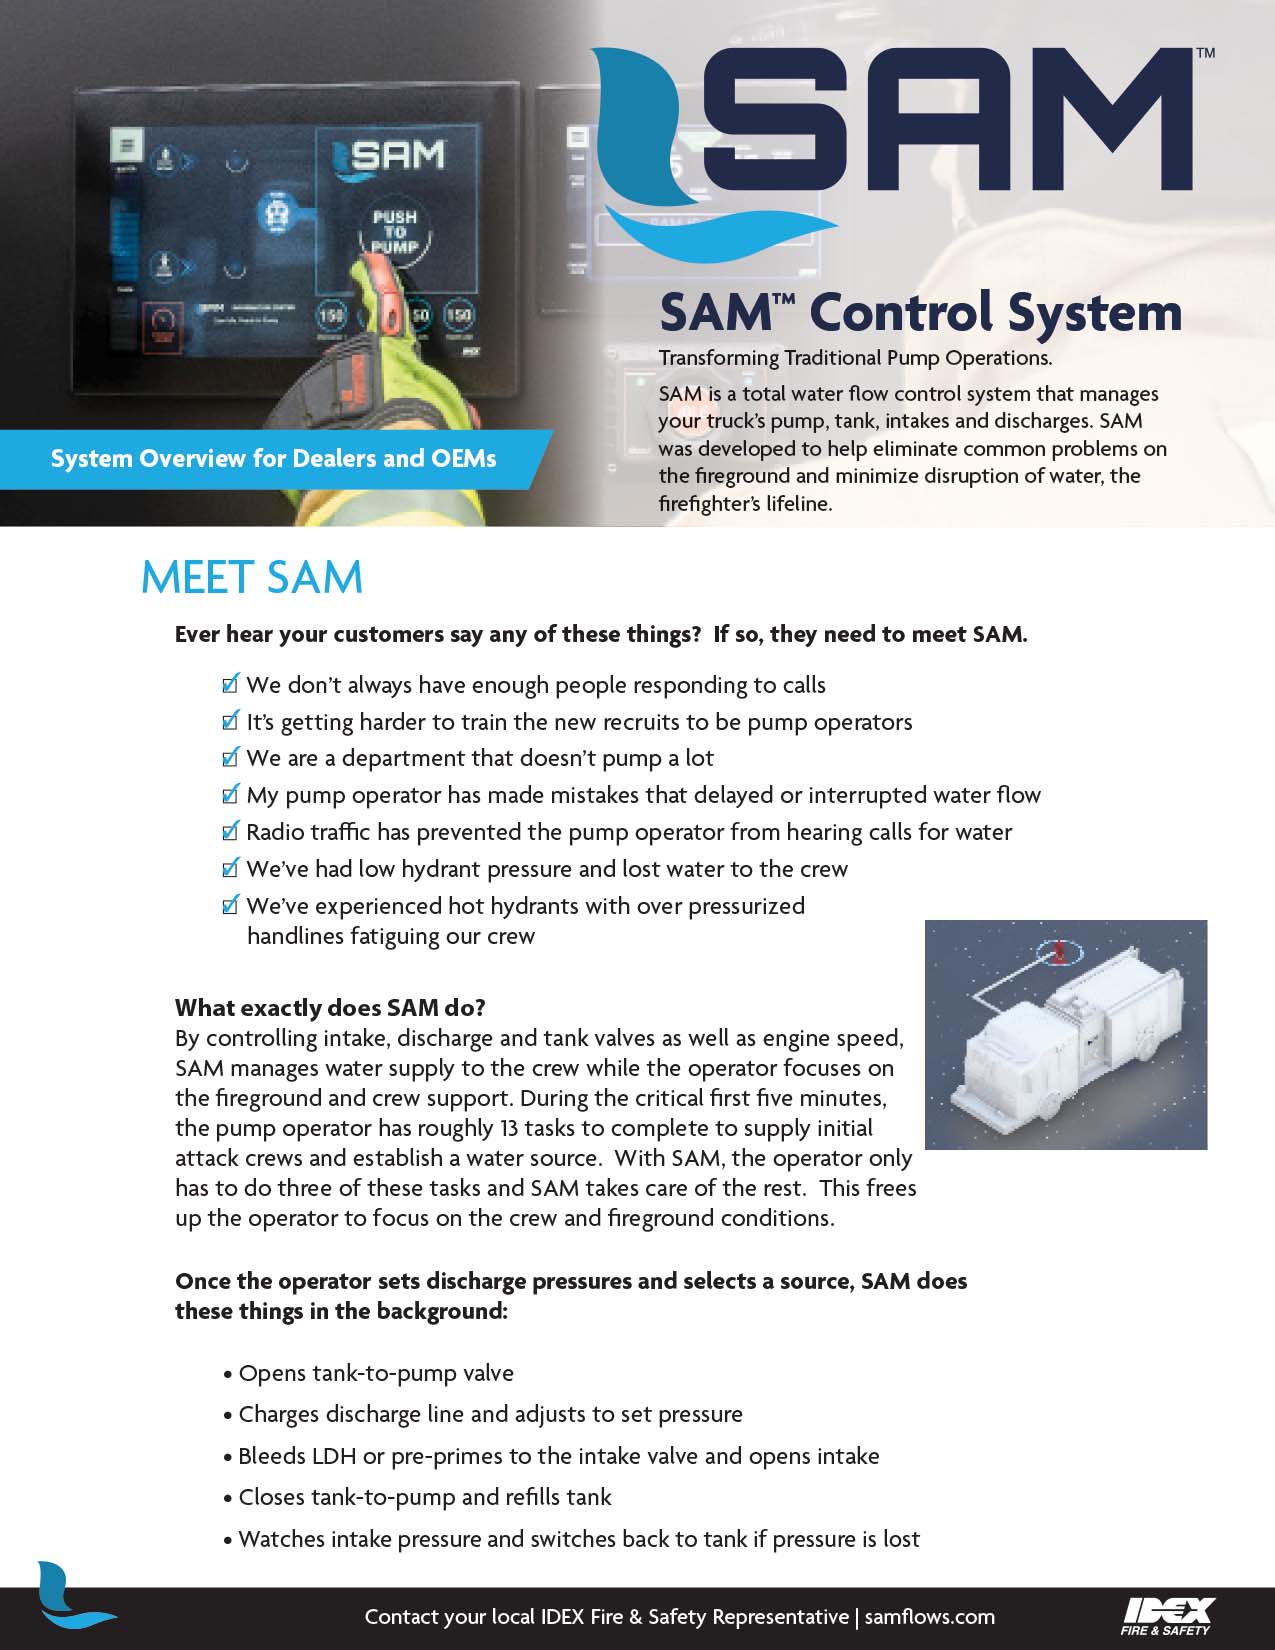 SAM System (for SAM system page)